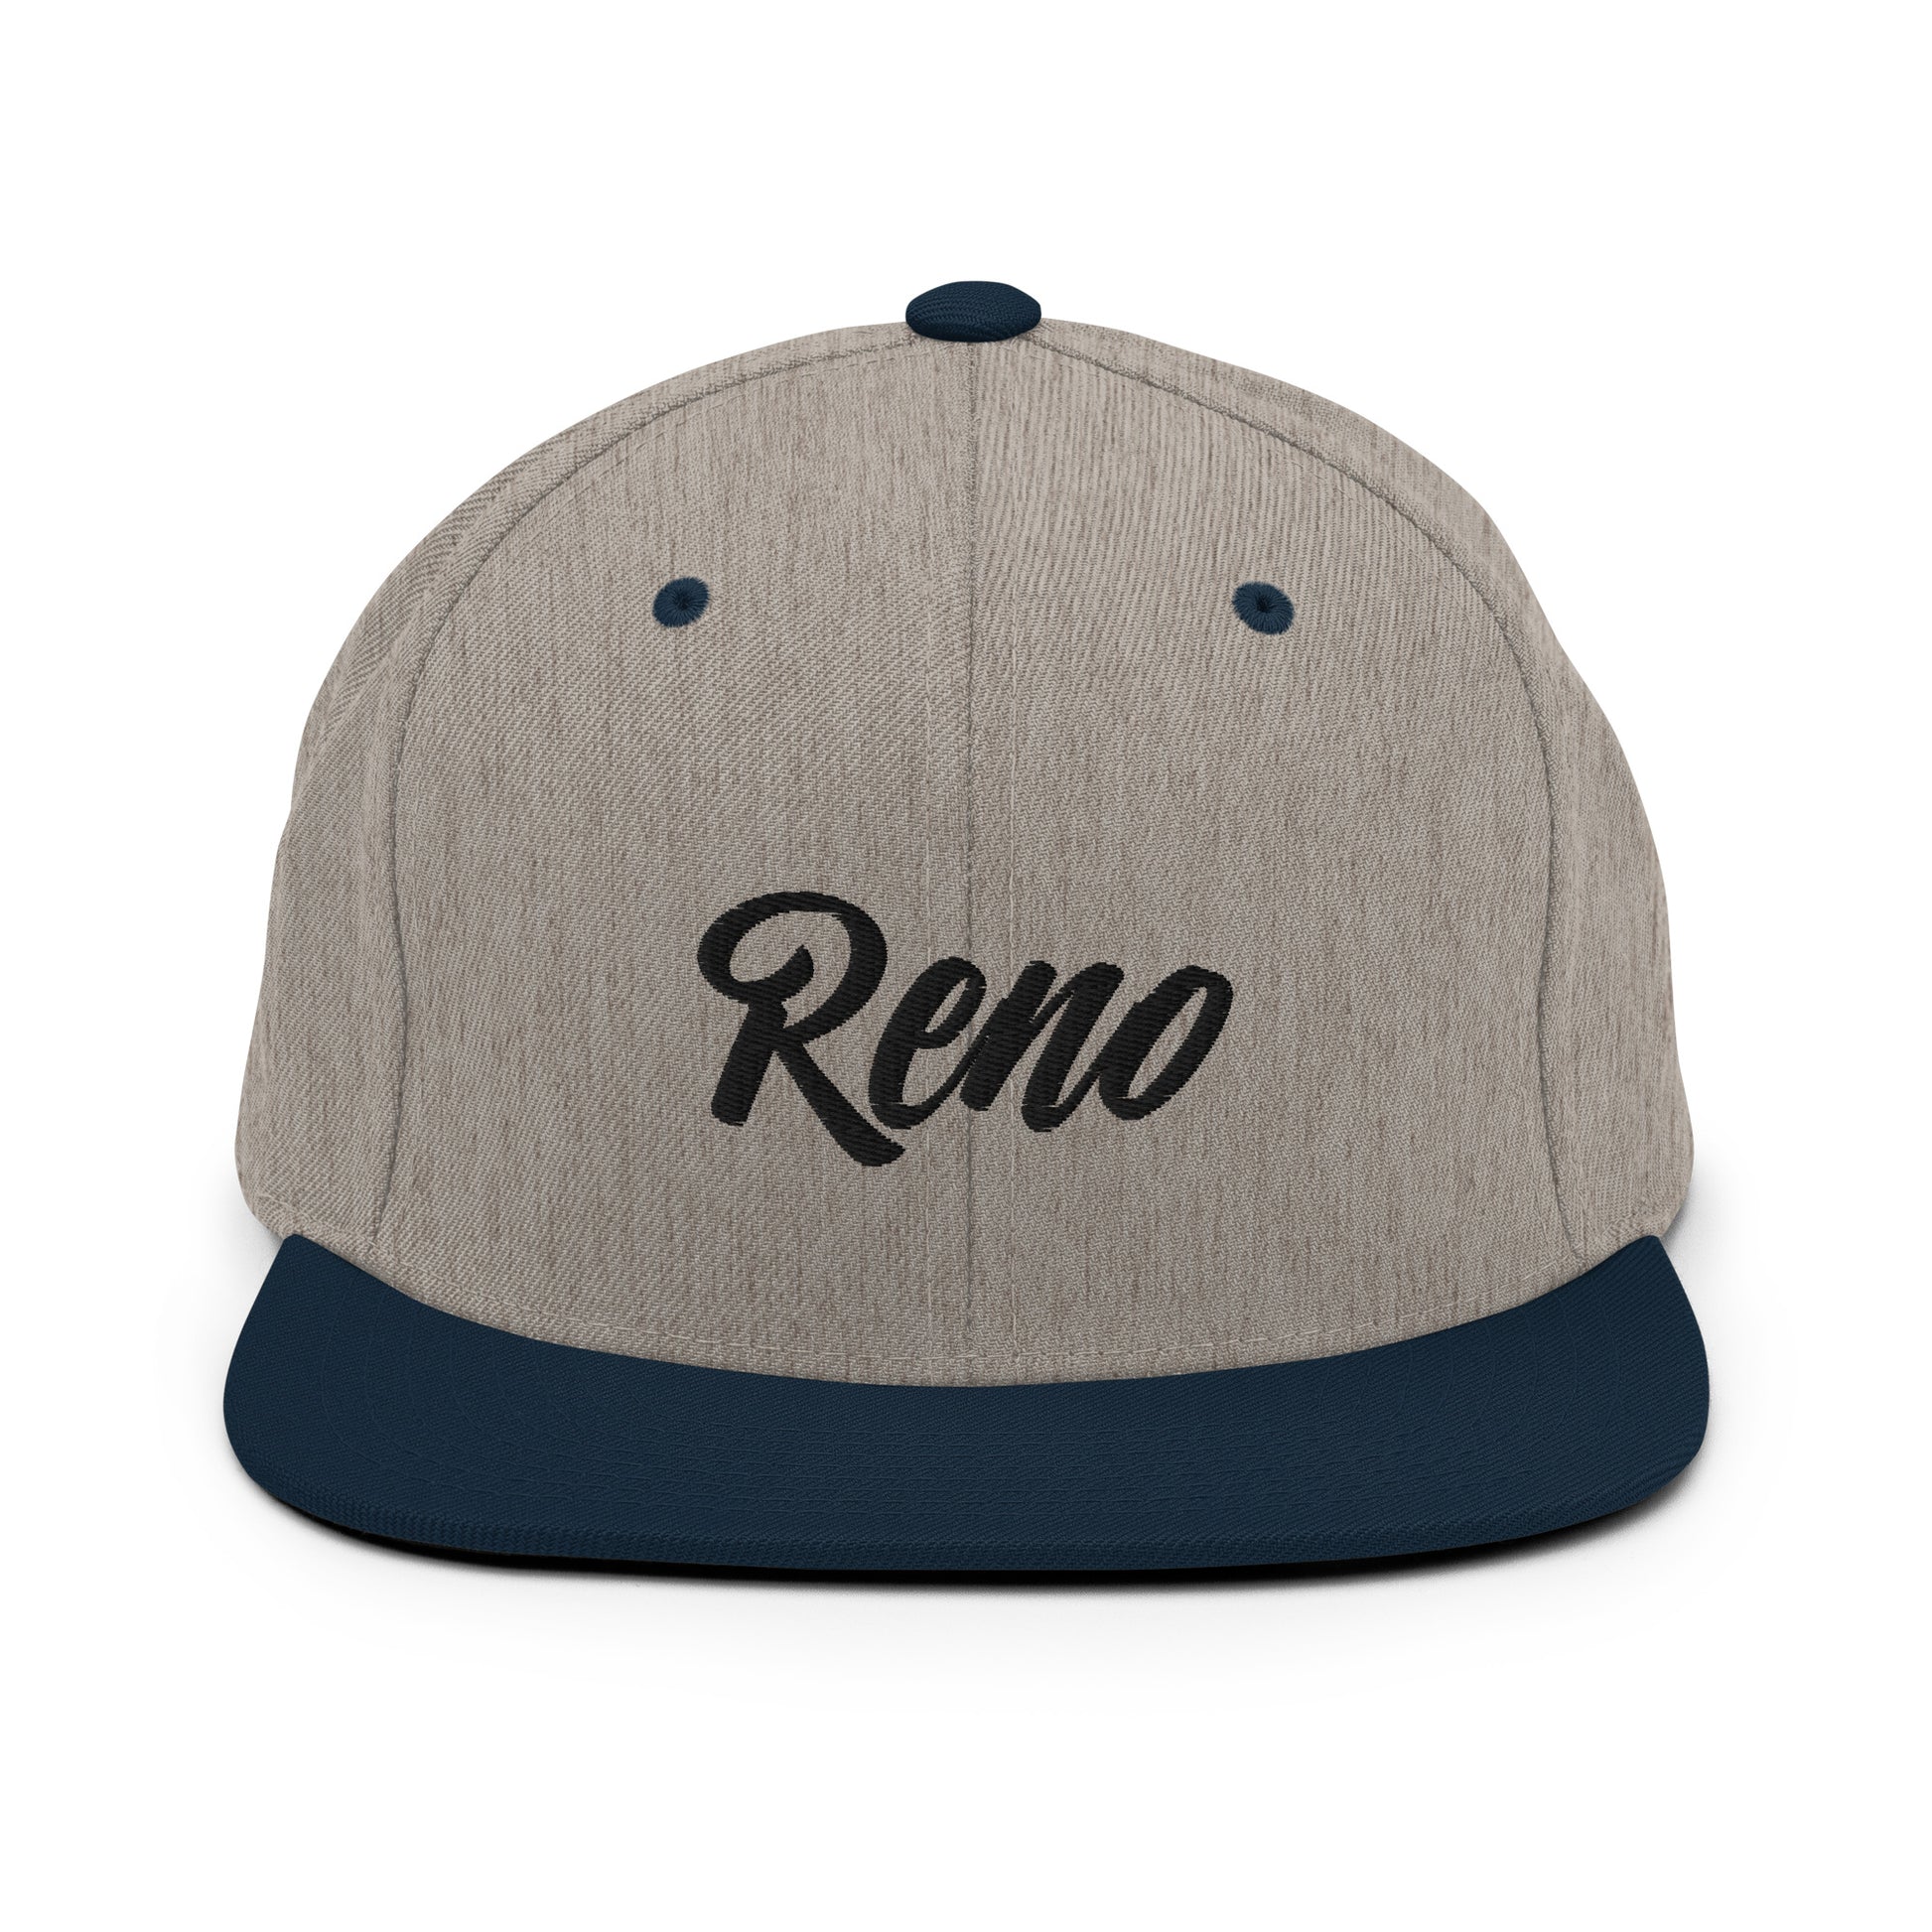 Reno Snapback Hat 5